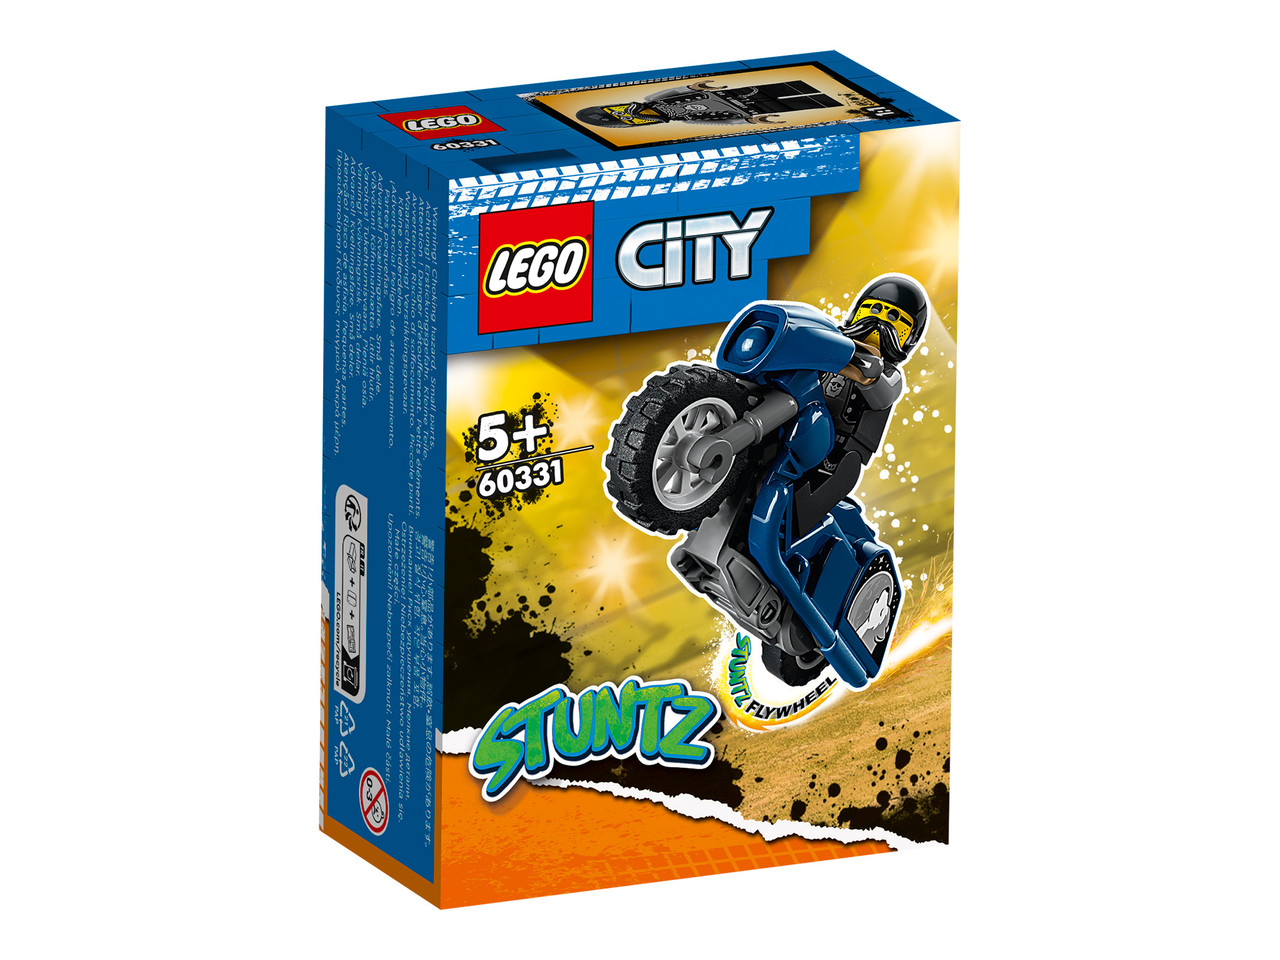 60331 Lego City Stuntz Туристический трюковой мотоцикл, Лего город Сити